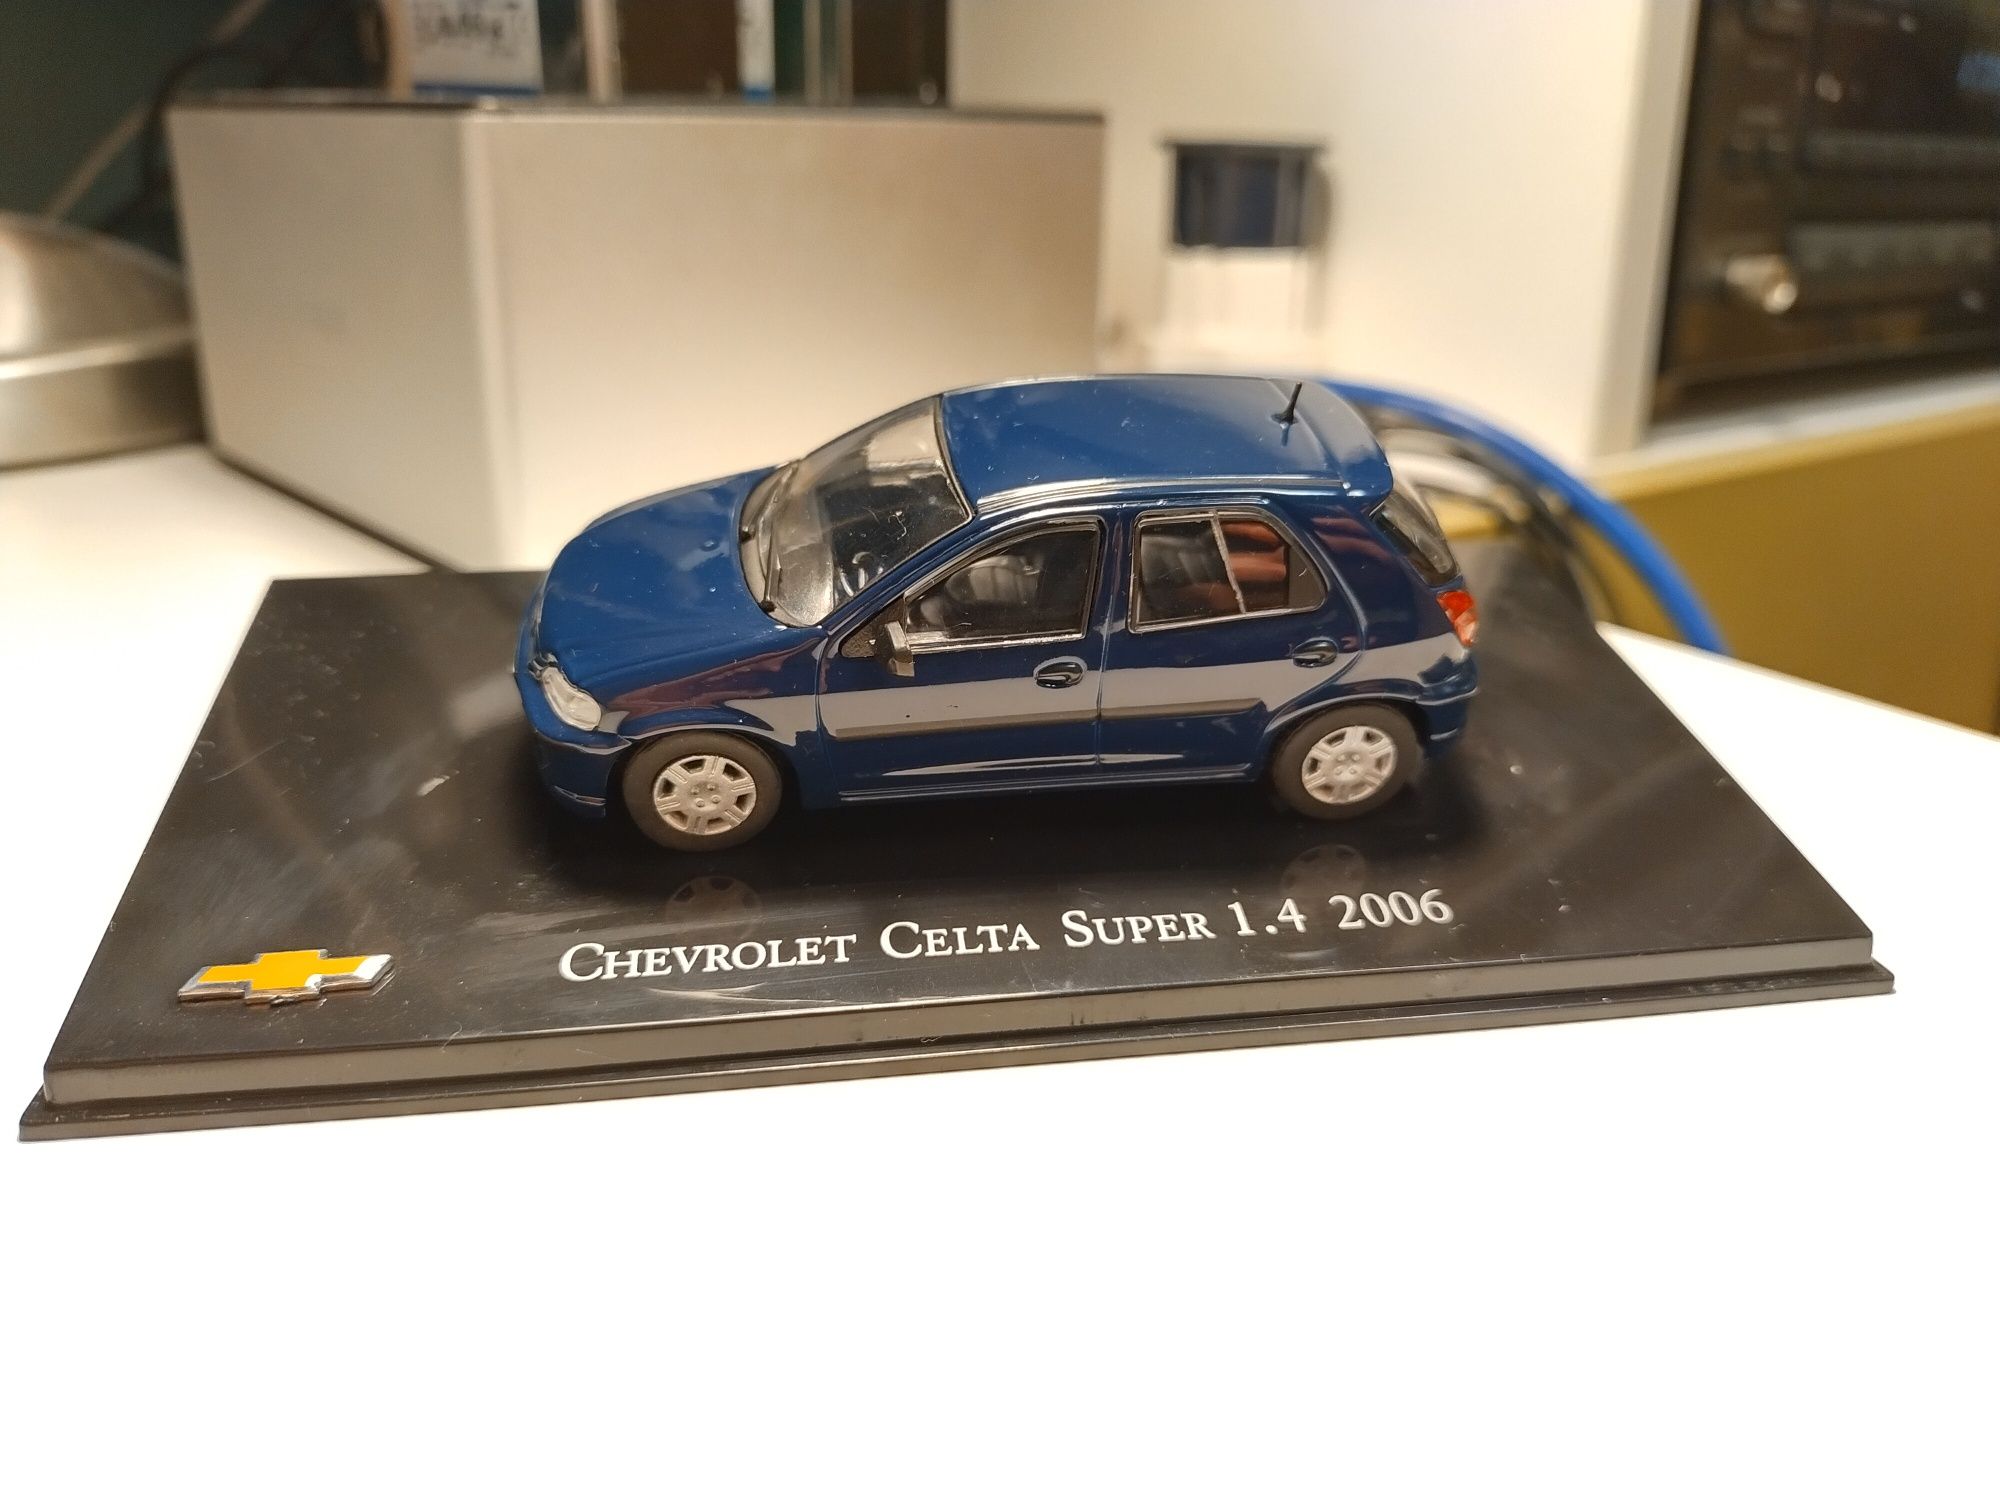 Chevrolet Celta Super 1.4 2006 1:43